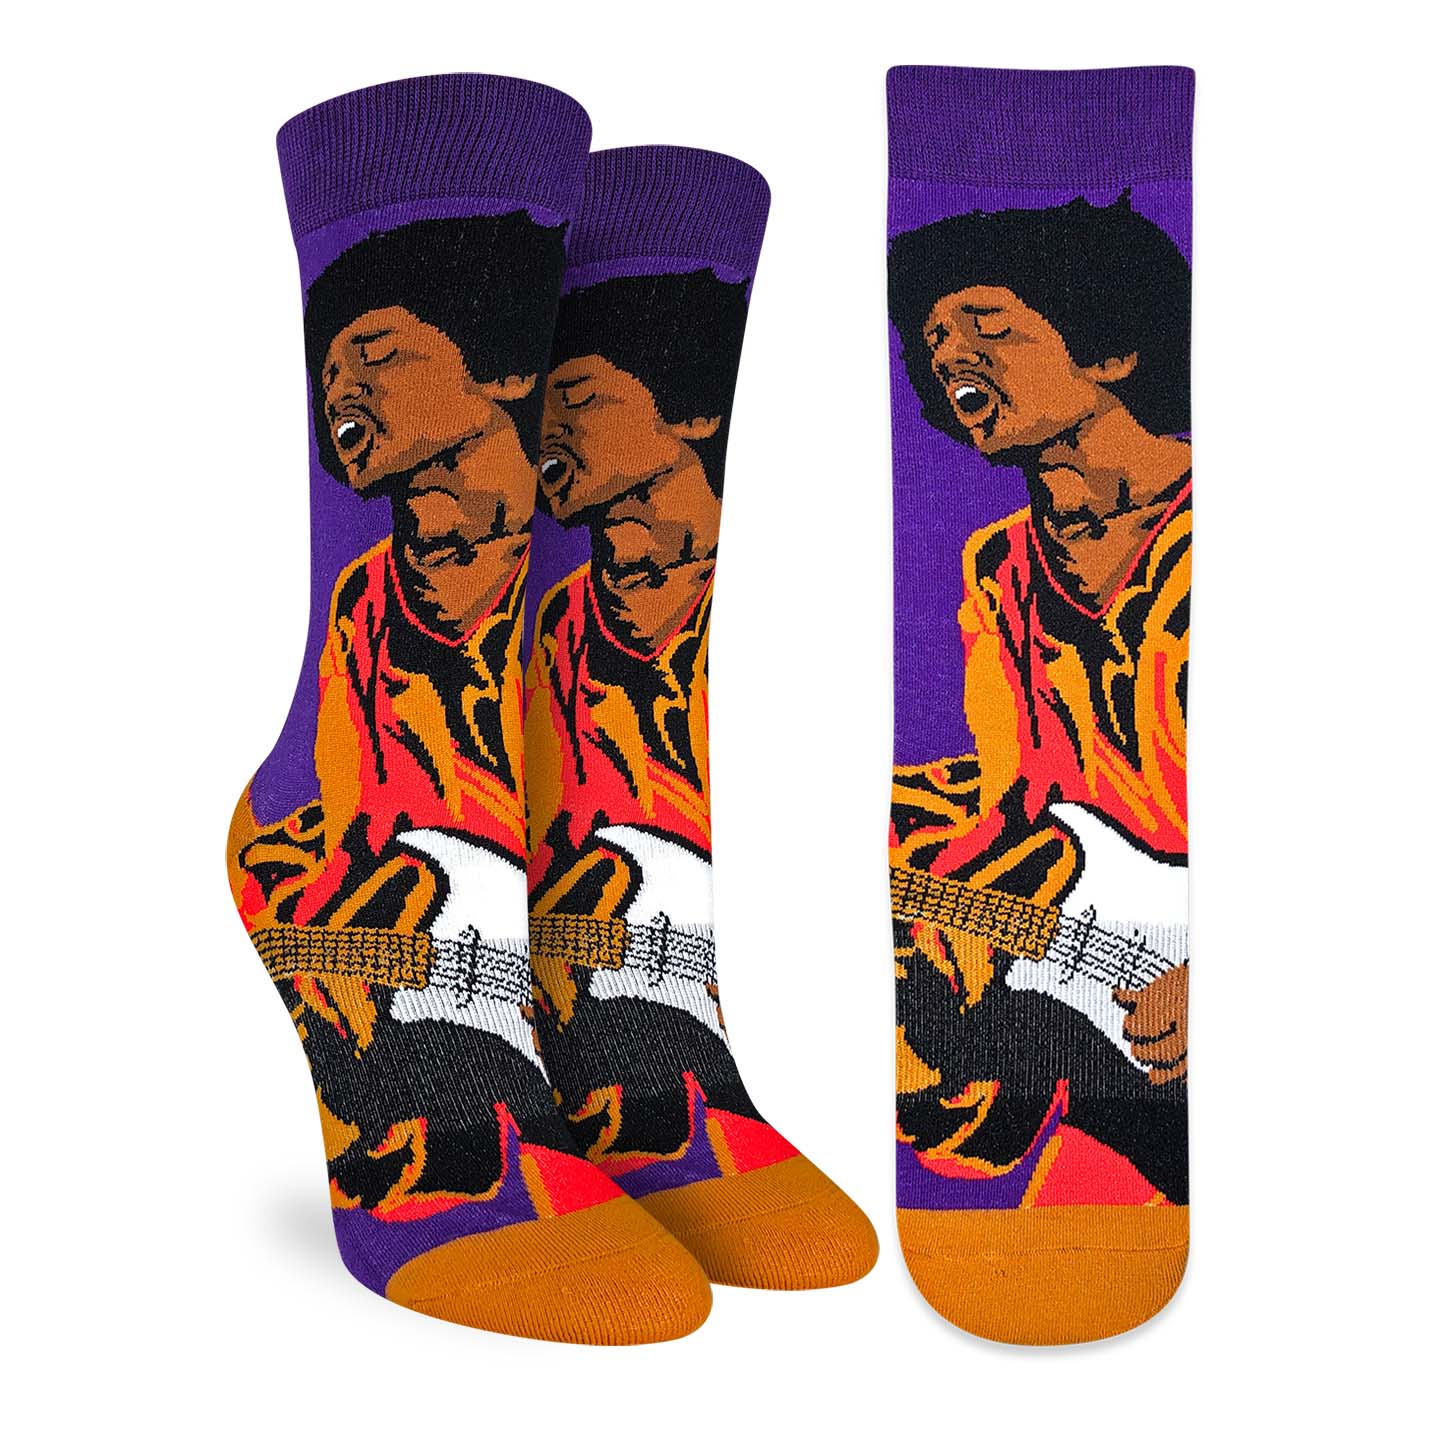 Jimi Hendrix Rocking Out Socks